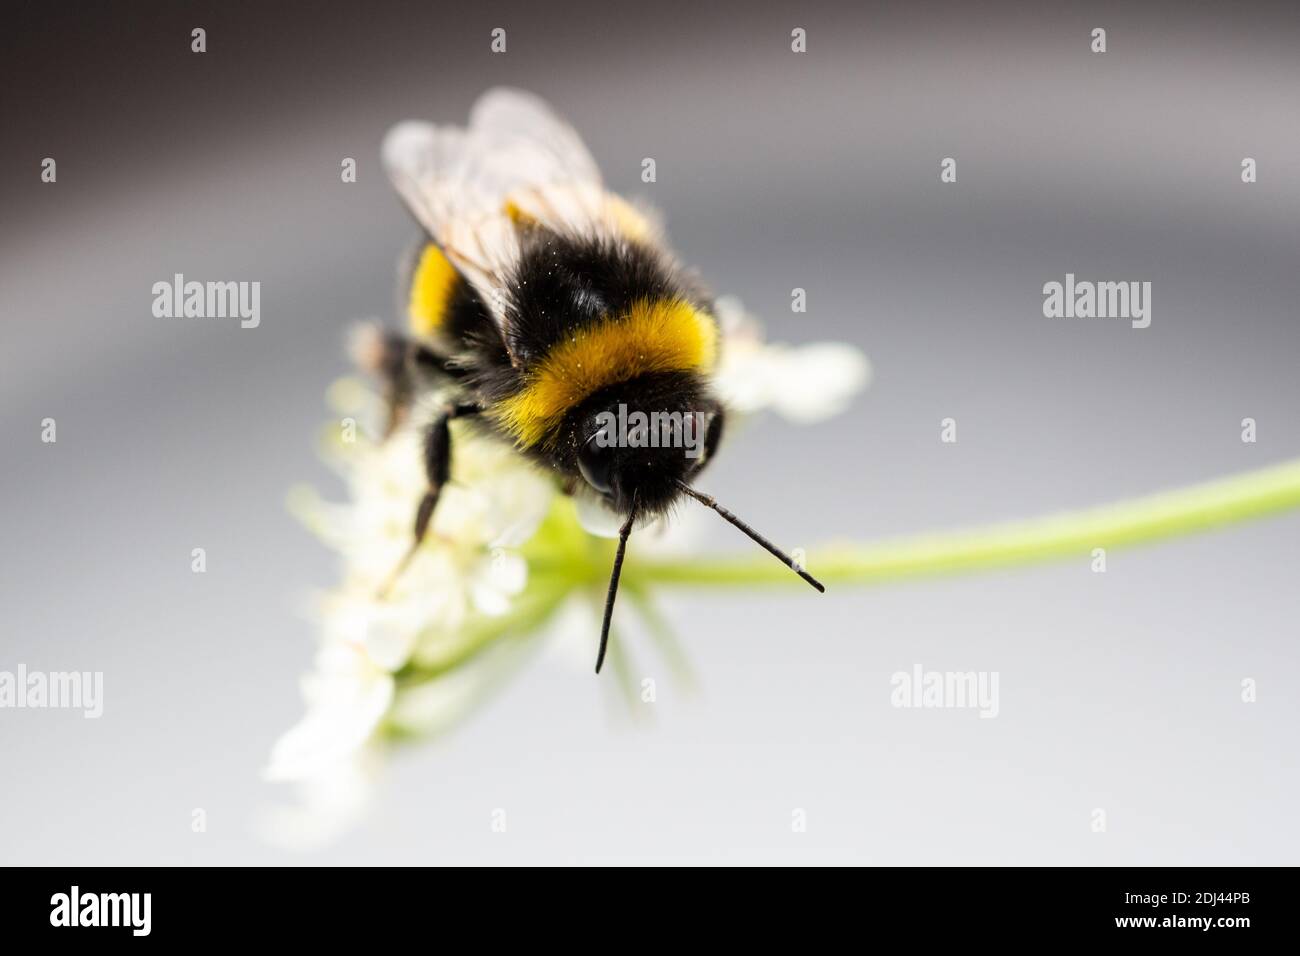 Bumble Bee On Flower Head Stock Photo